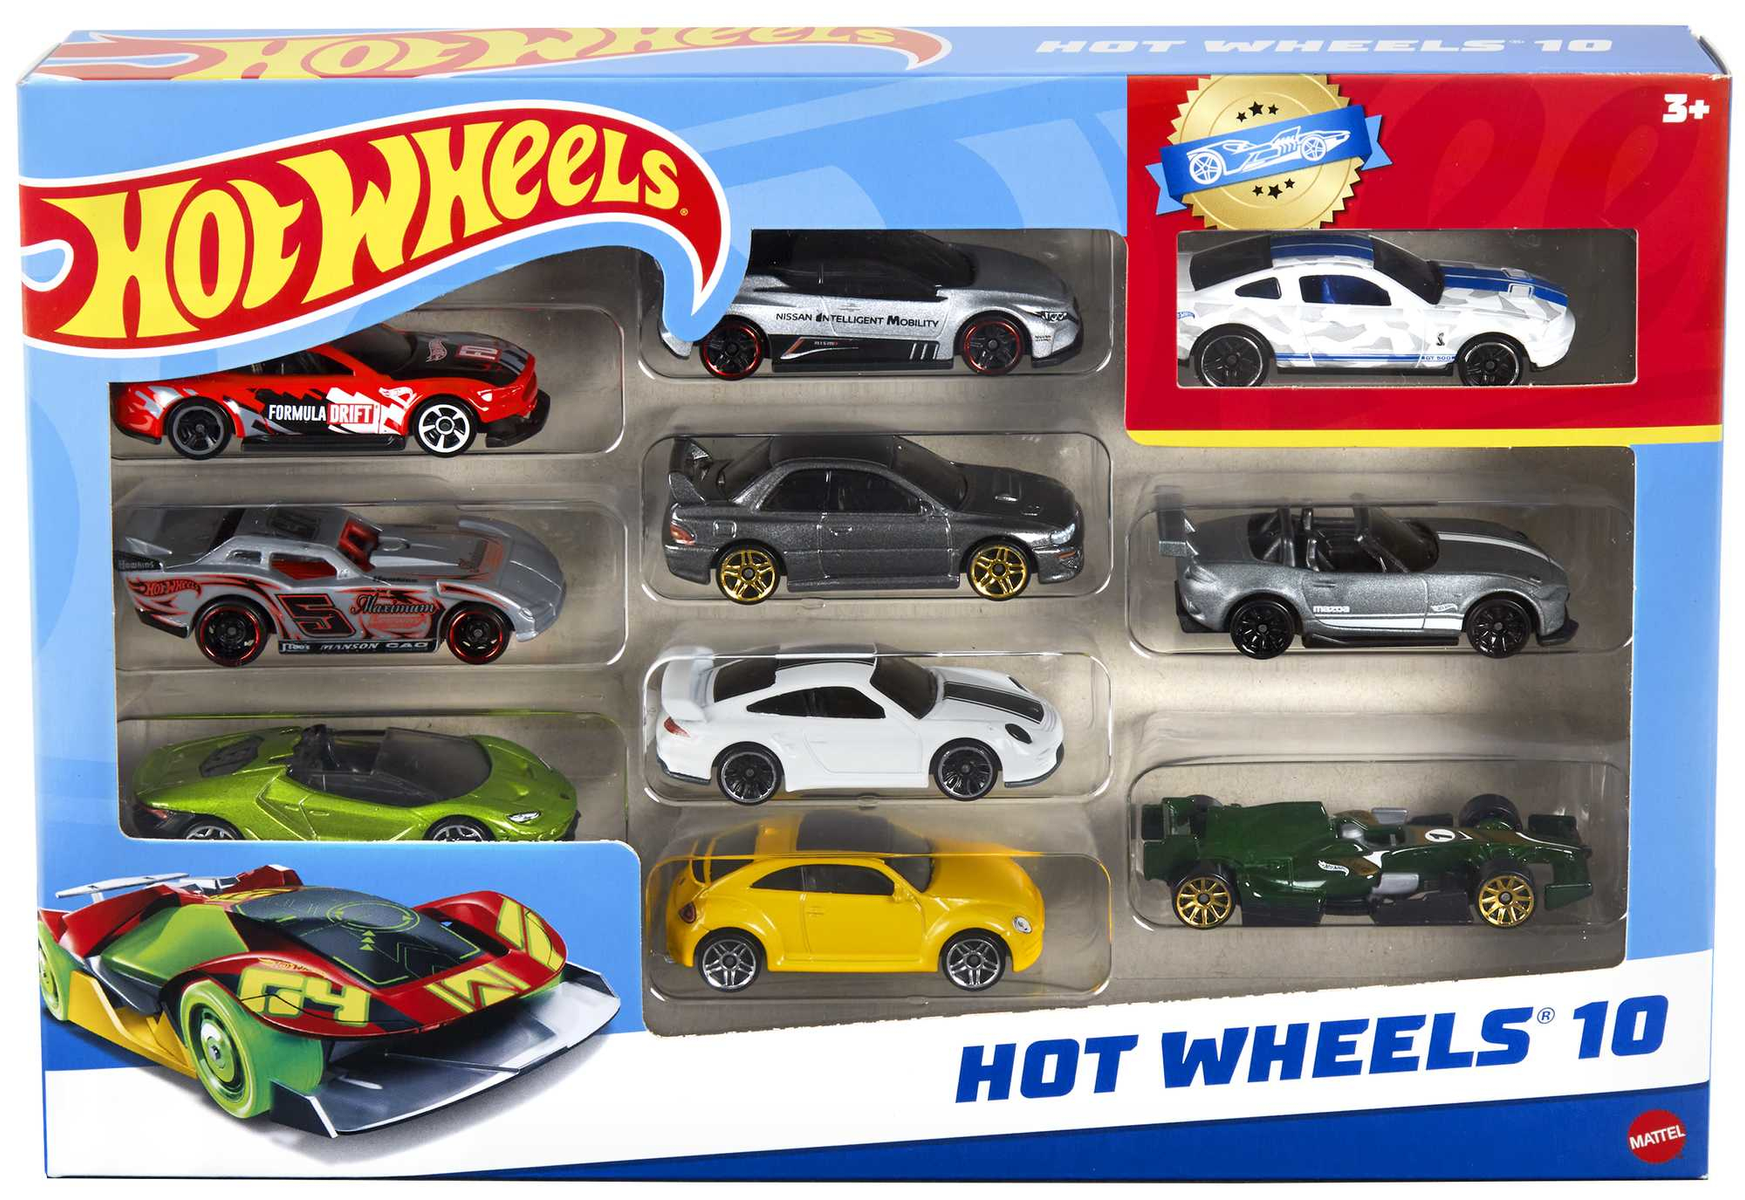 HOT WHEELS 412496 toy vehicle